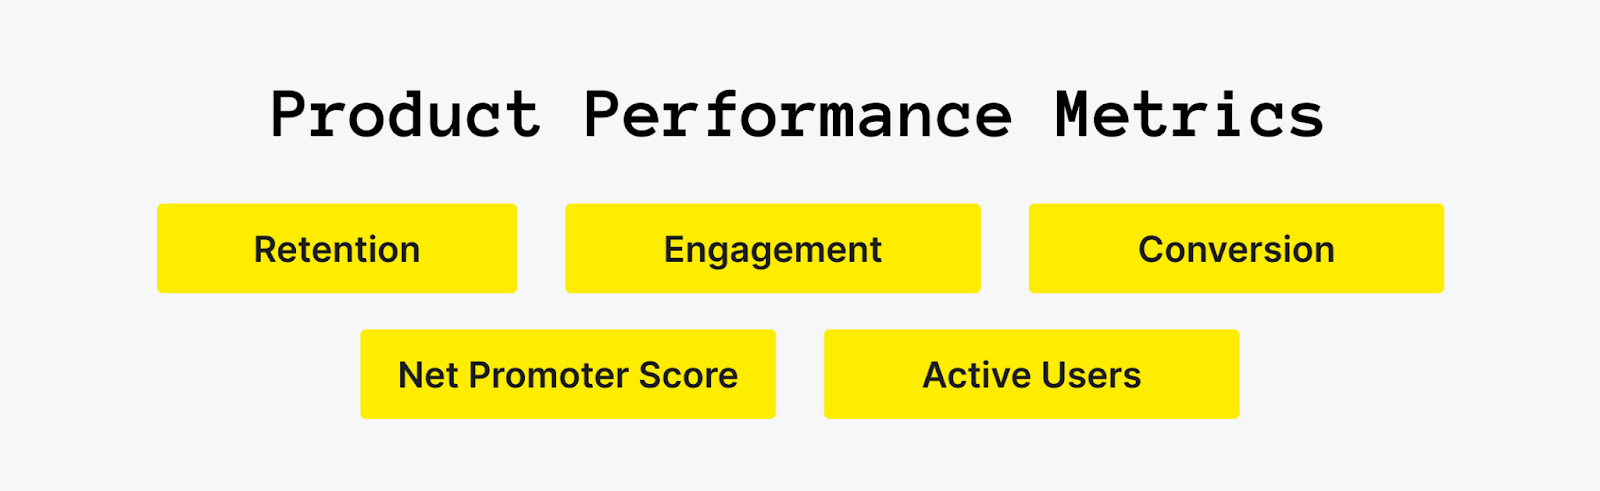 product performance metrics image